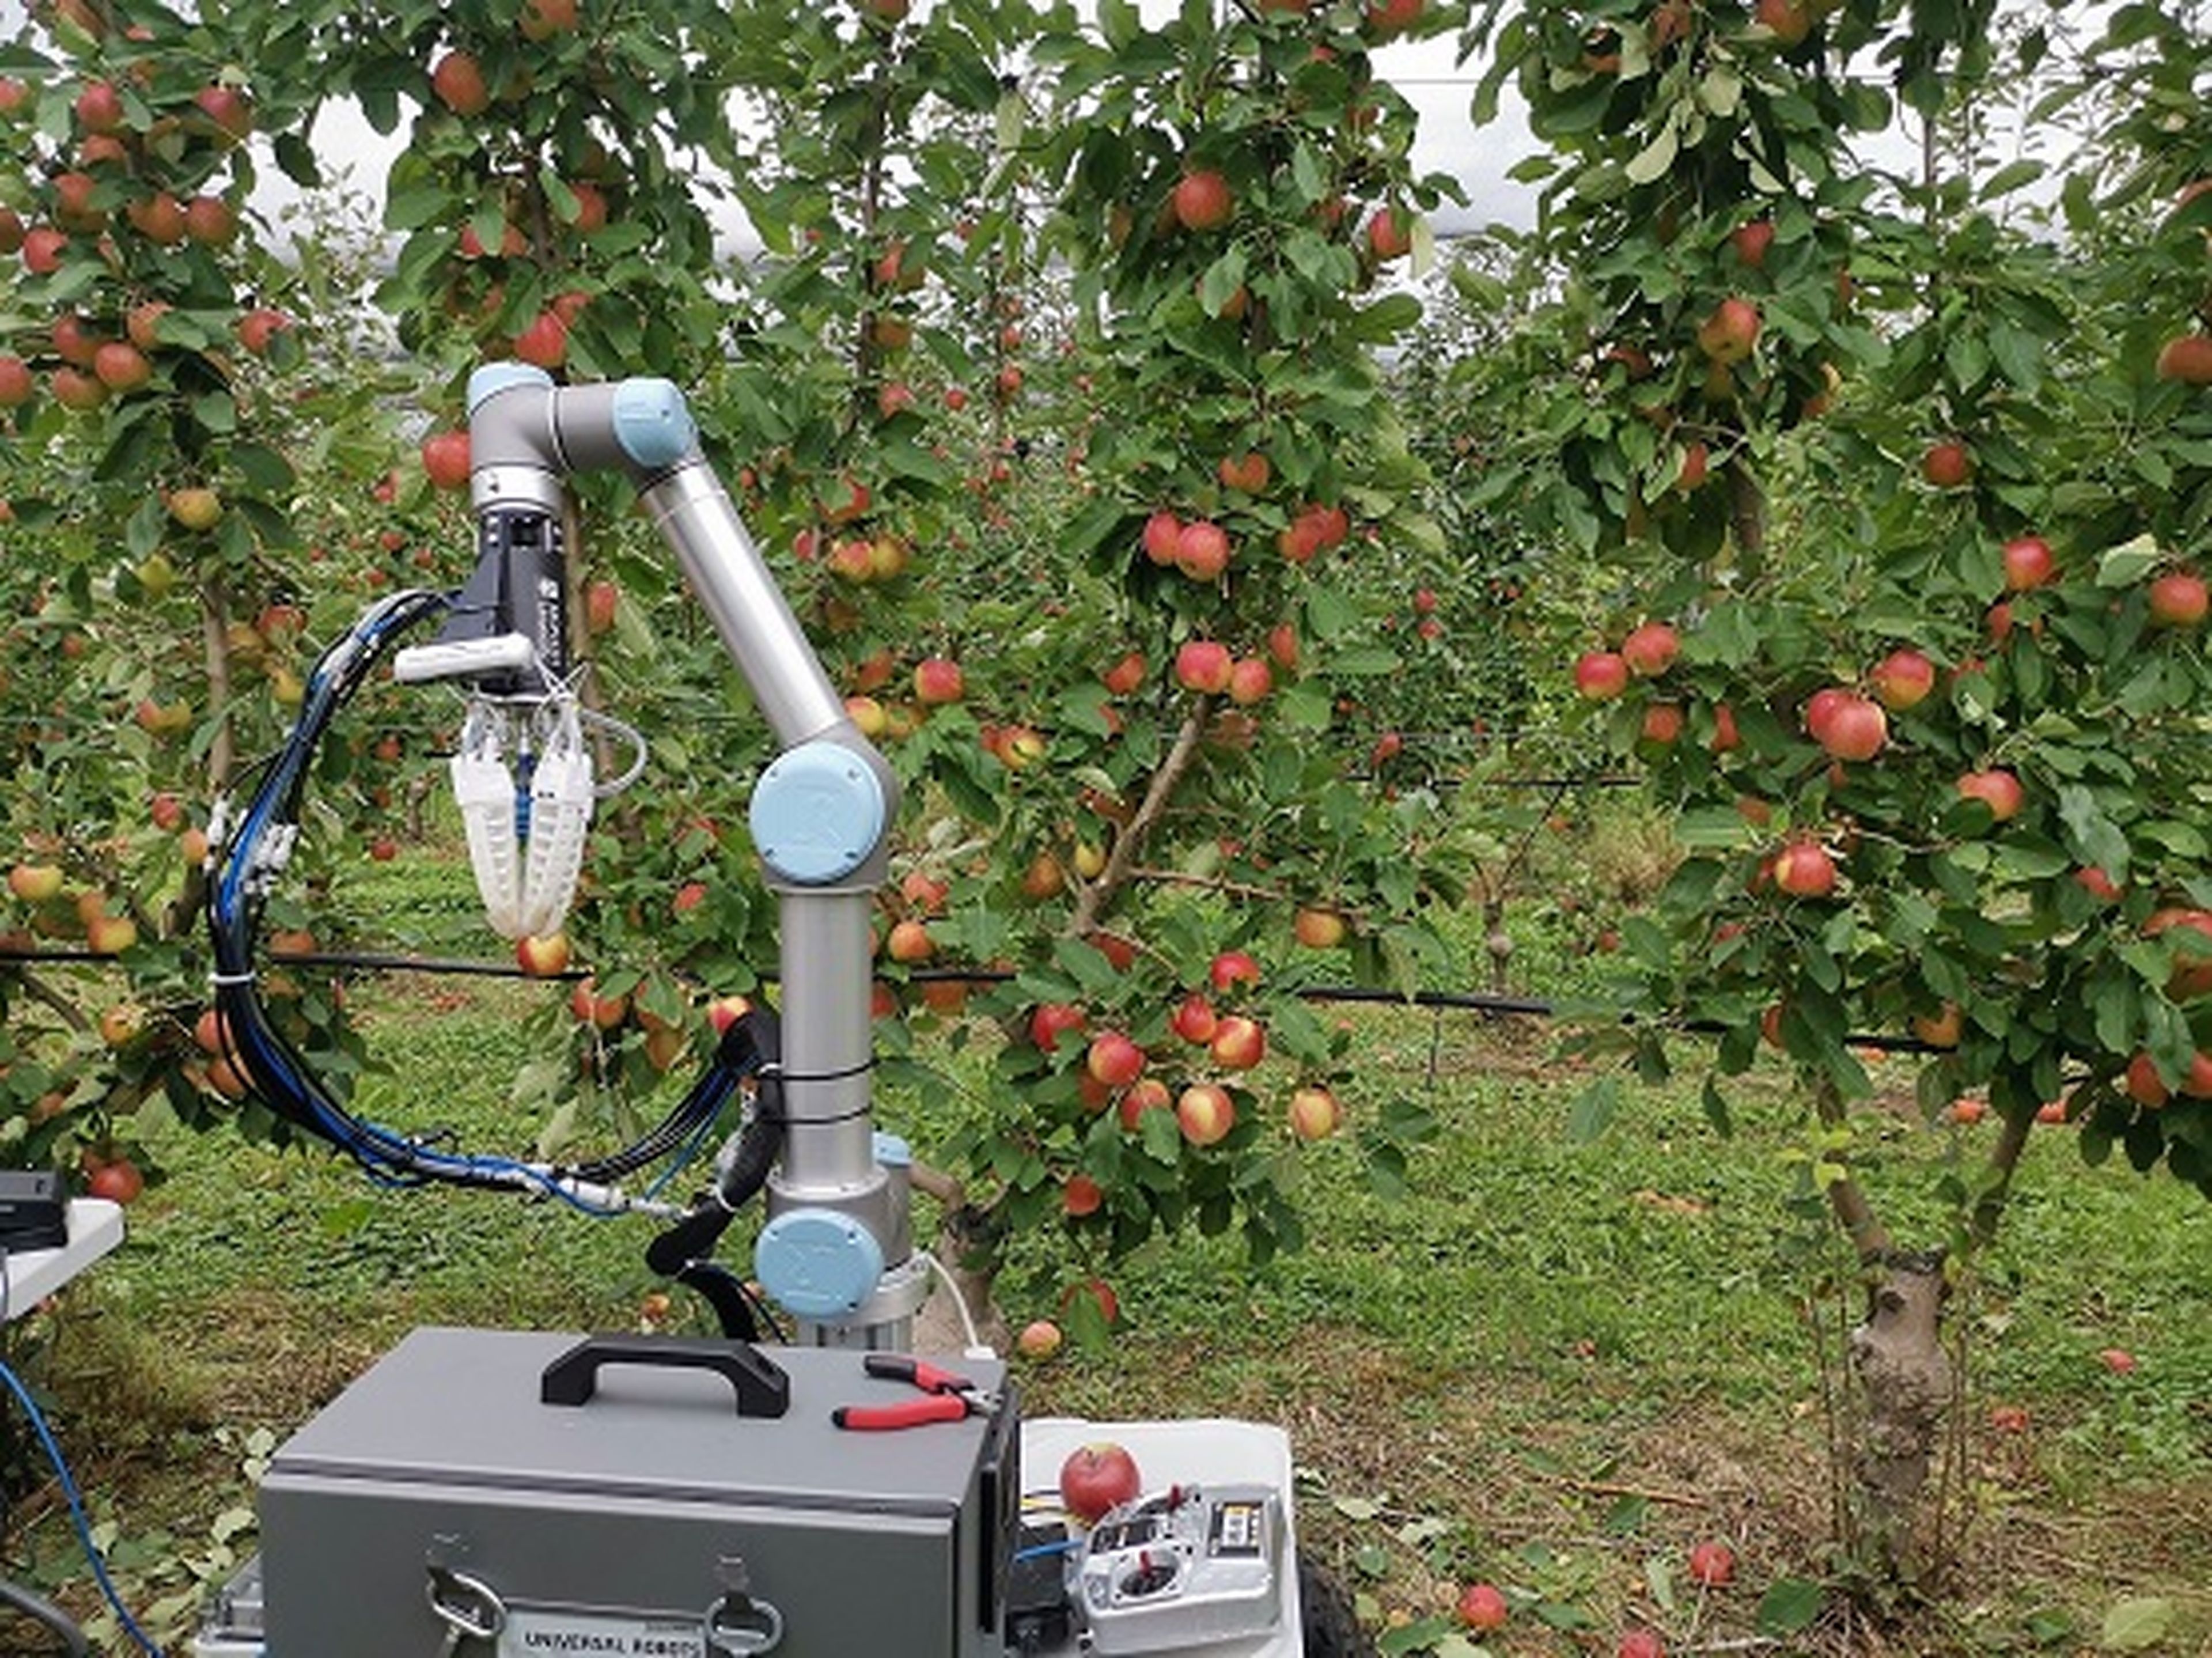 Robot agricultor